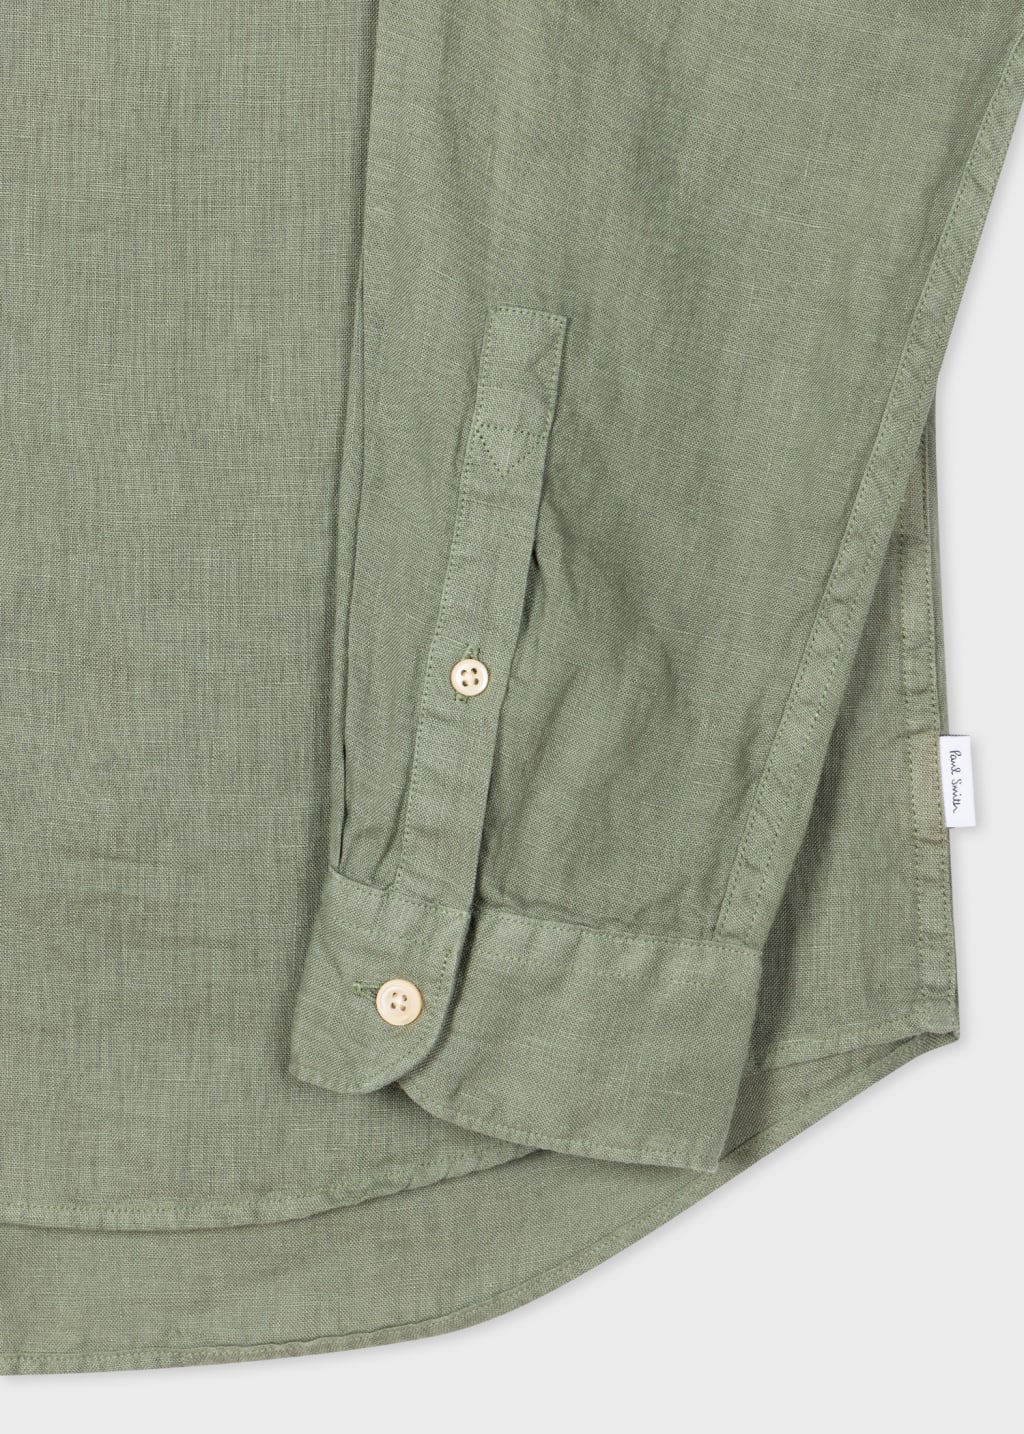 Detail View - Green Linen Button-Down Shirt Paul Smith